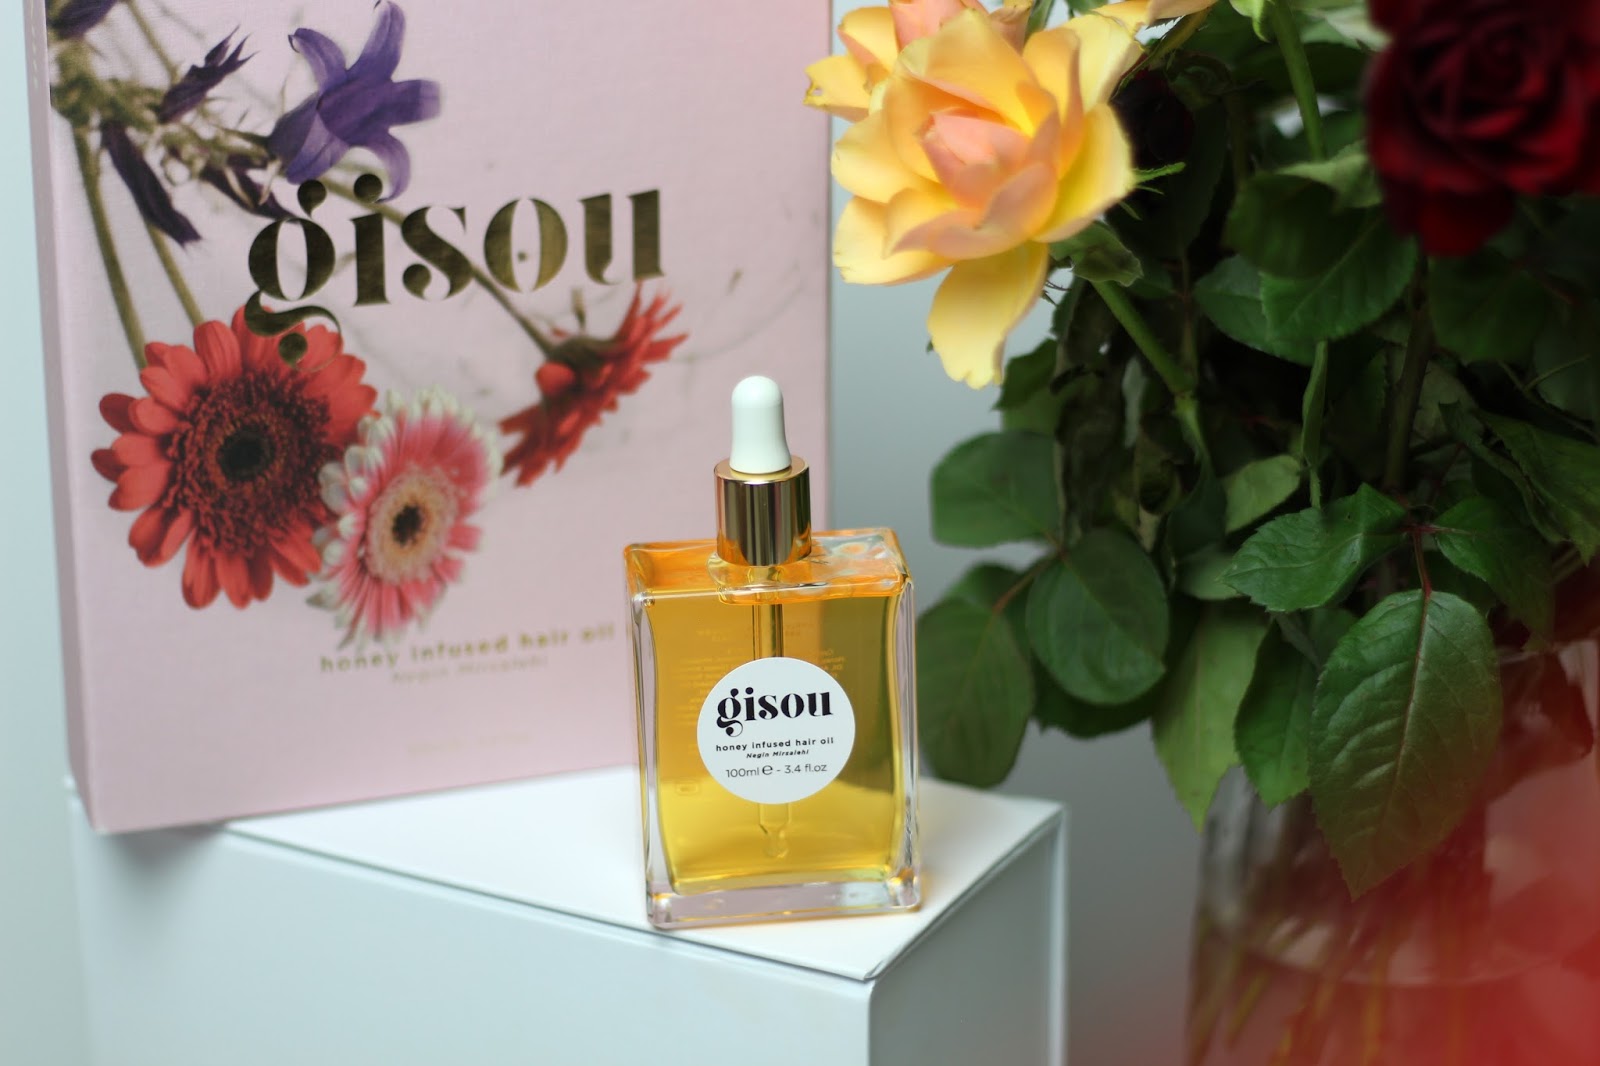 Gisou - honey hair oil by Negin Mirsalehi